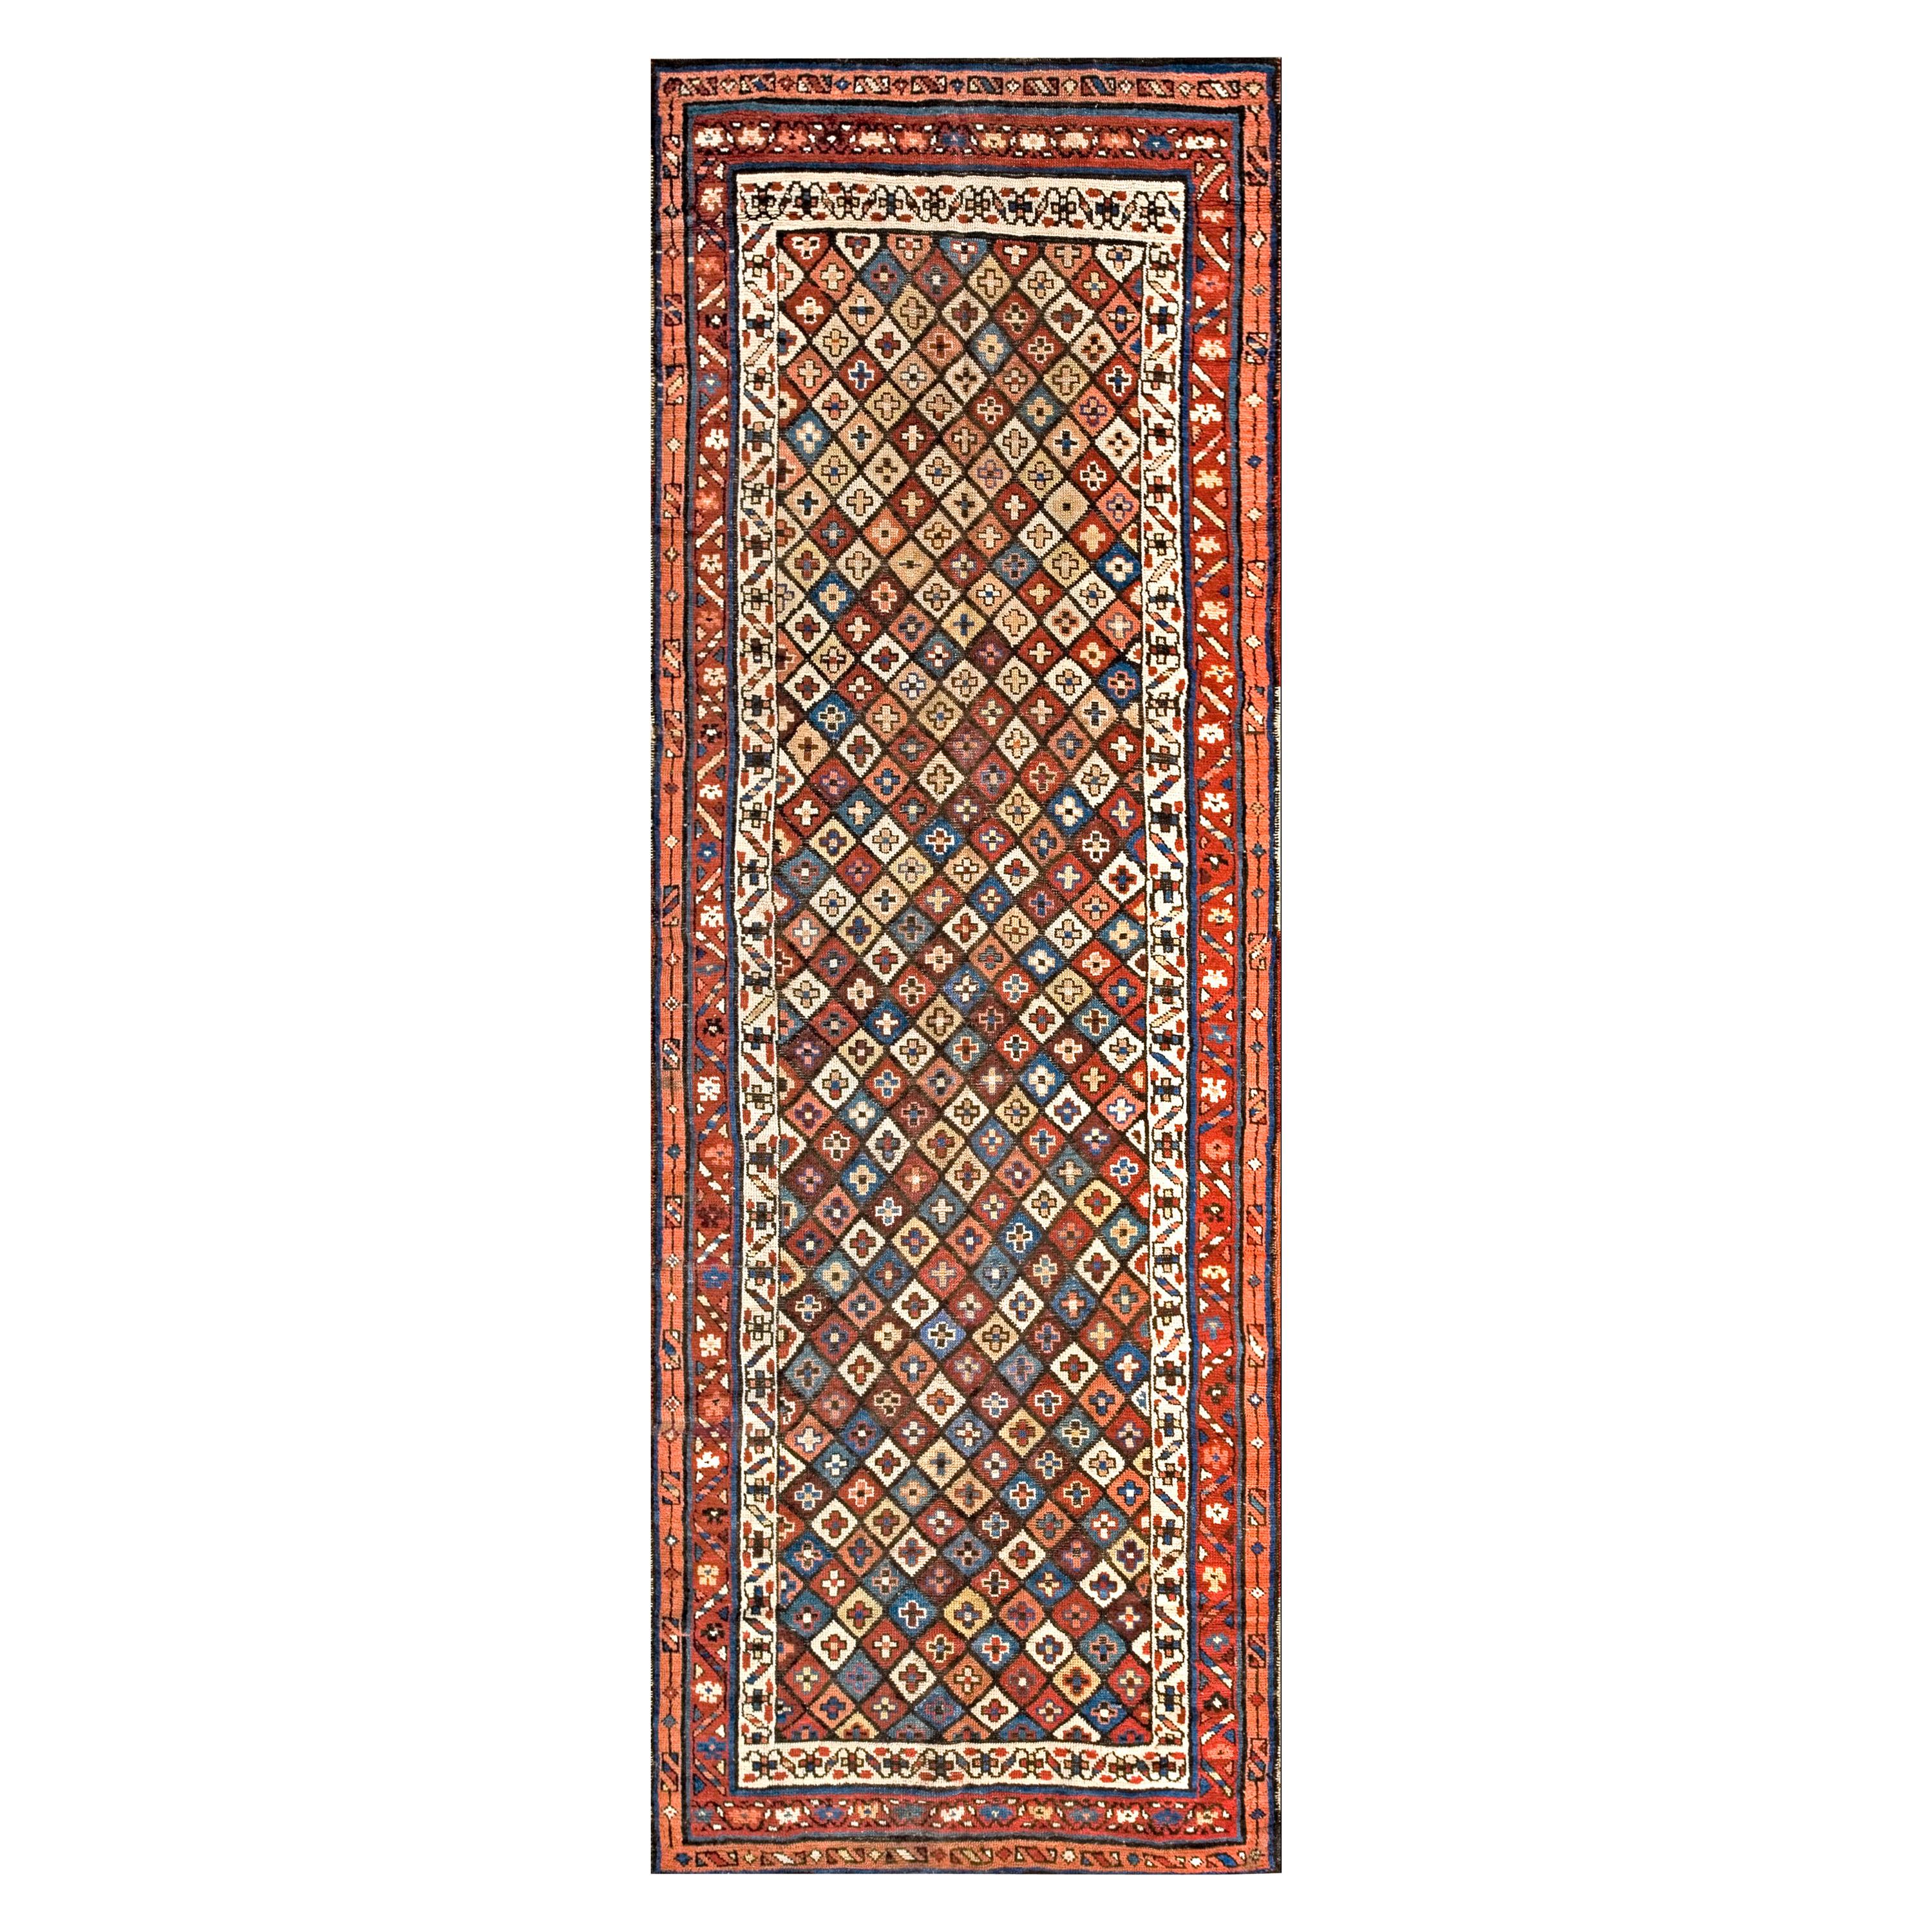 Late 19th Century W. Persian Kurdish Carpet ( 3'6" x 10' - 107 x 305 ) For Sale